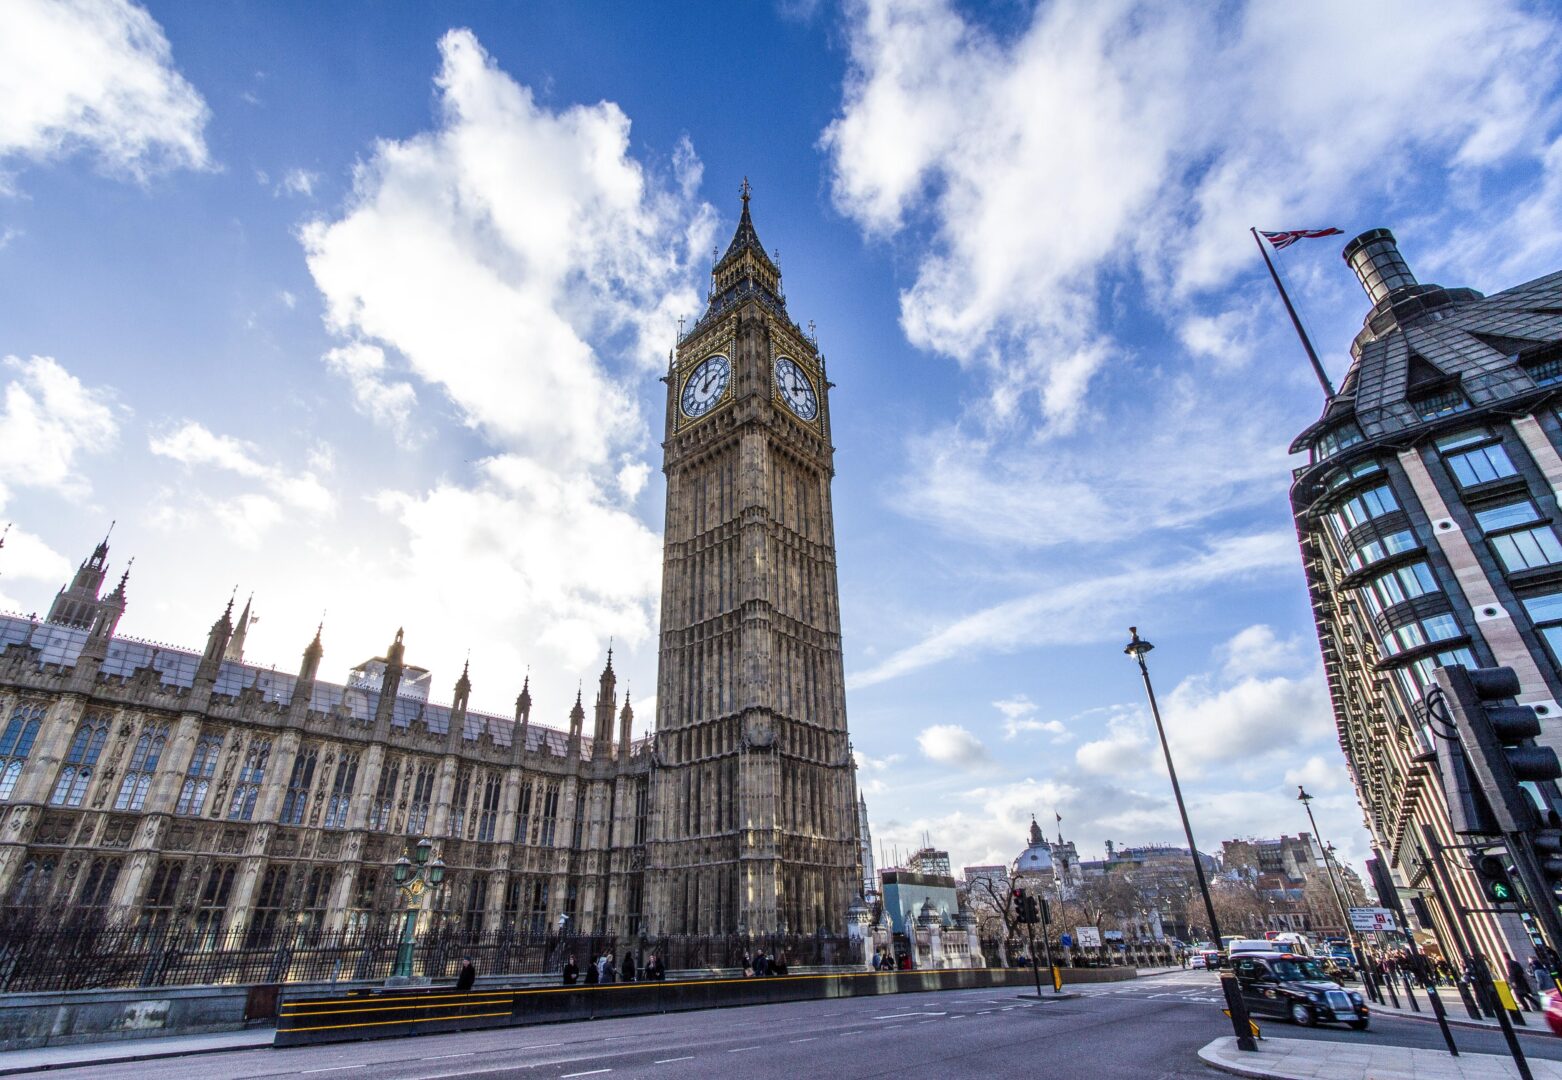 Parliament building in London and Big Ben clock.